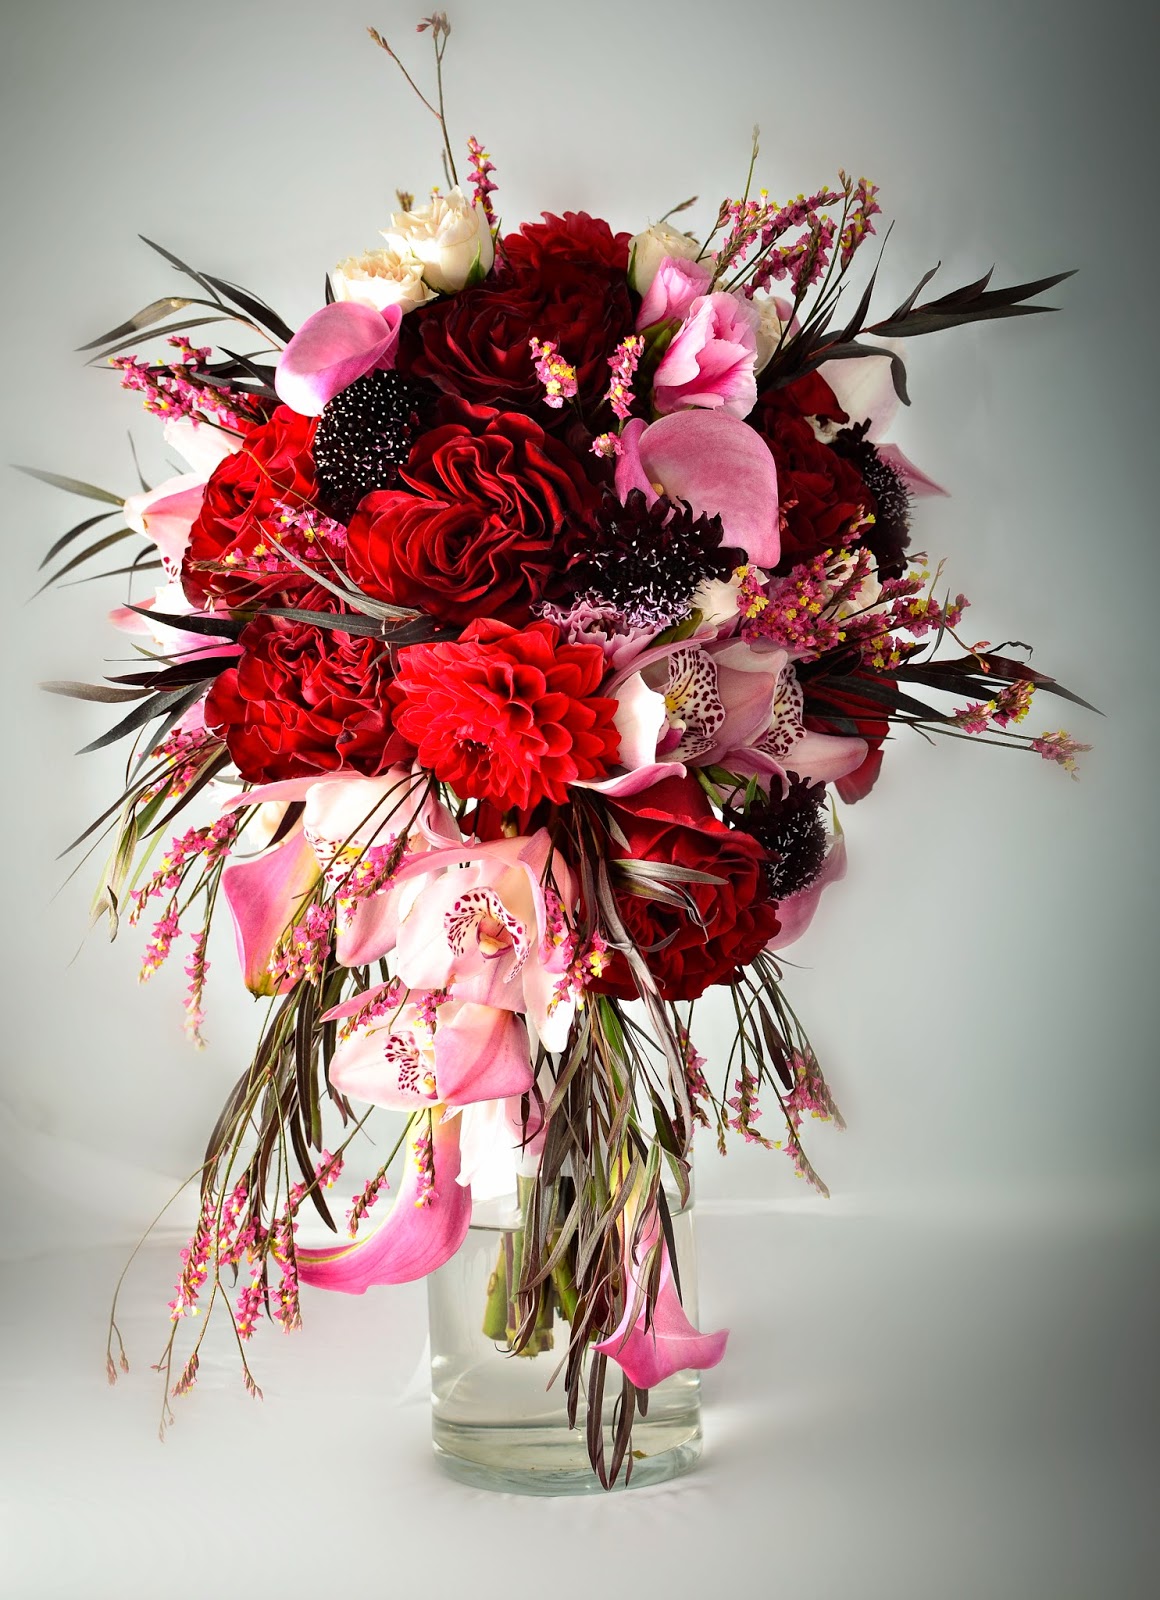 Chanele Rose Flowers Blog Sydney Wedding Stylist Florist White